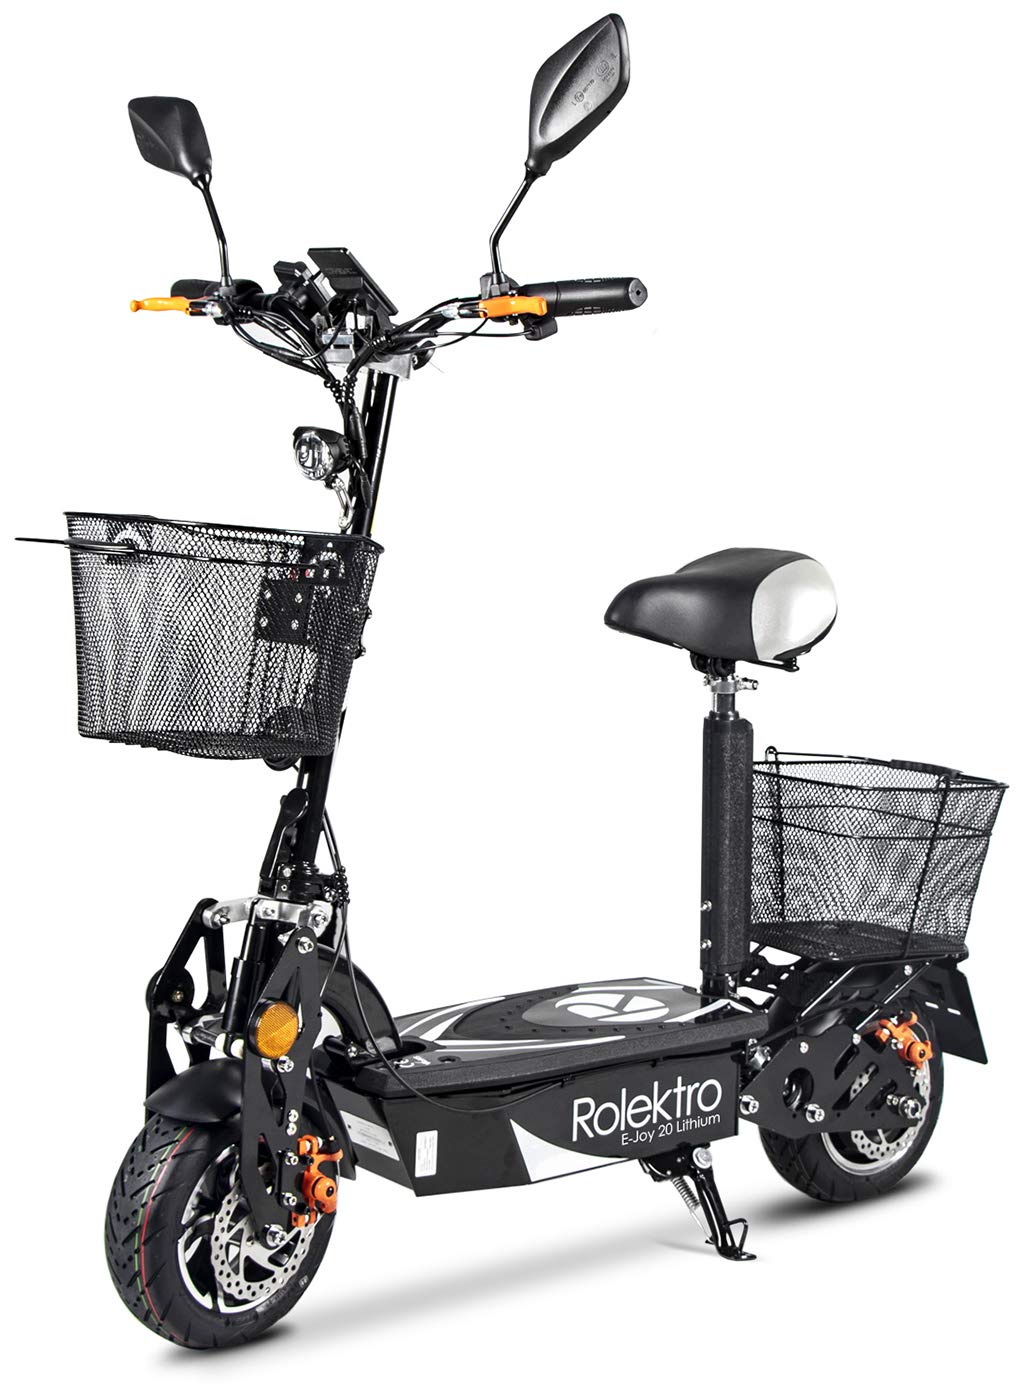 Rolektro E-Joy 20 Elektromoped mit Lithium Akku - 20 km/h E-Moped 500W Radnabenmotor 45km Reichweite EU-Zulassung, Schwarz